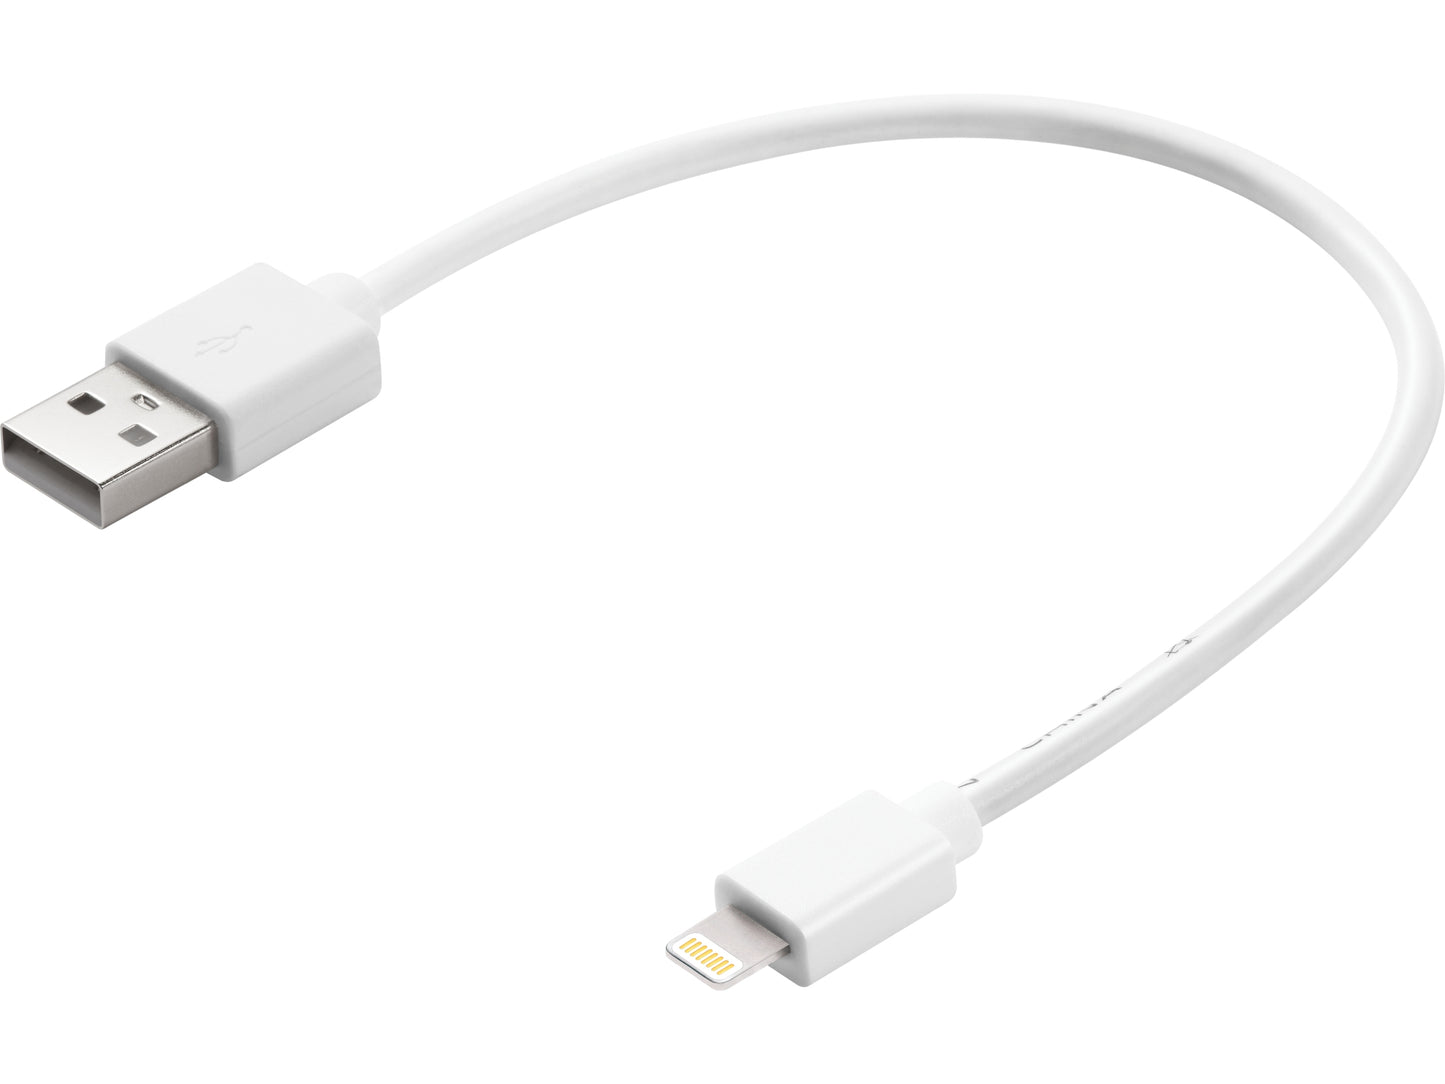 Sandberg 441-19 USB&gt;Молния MFI 0,2м Белый